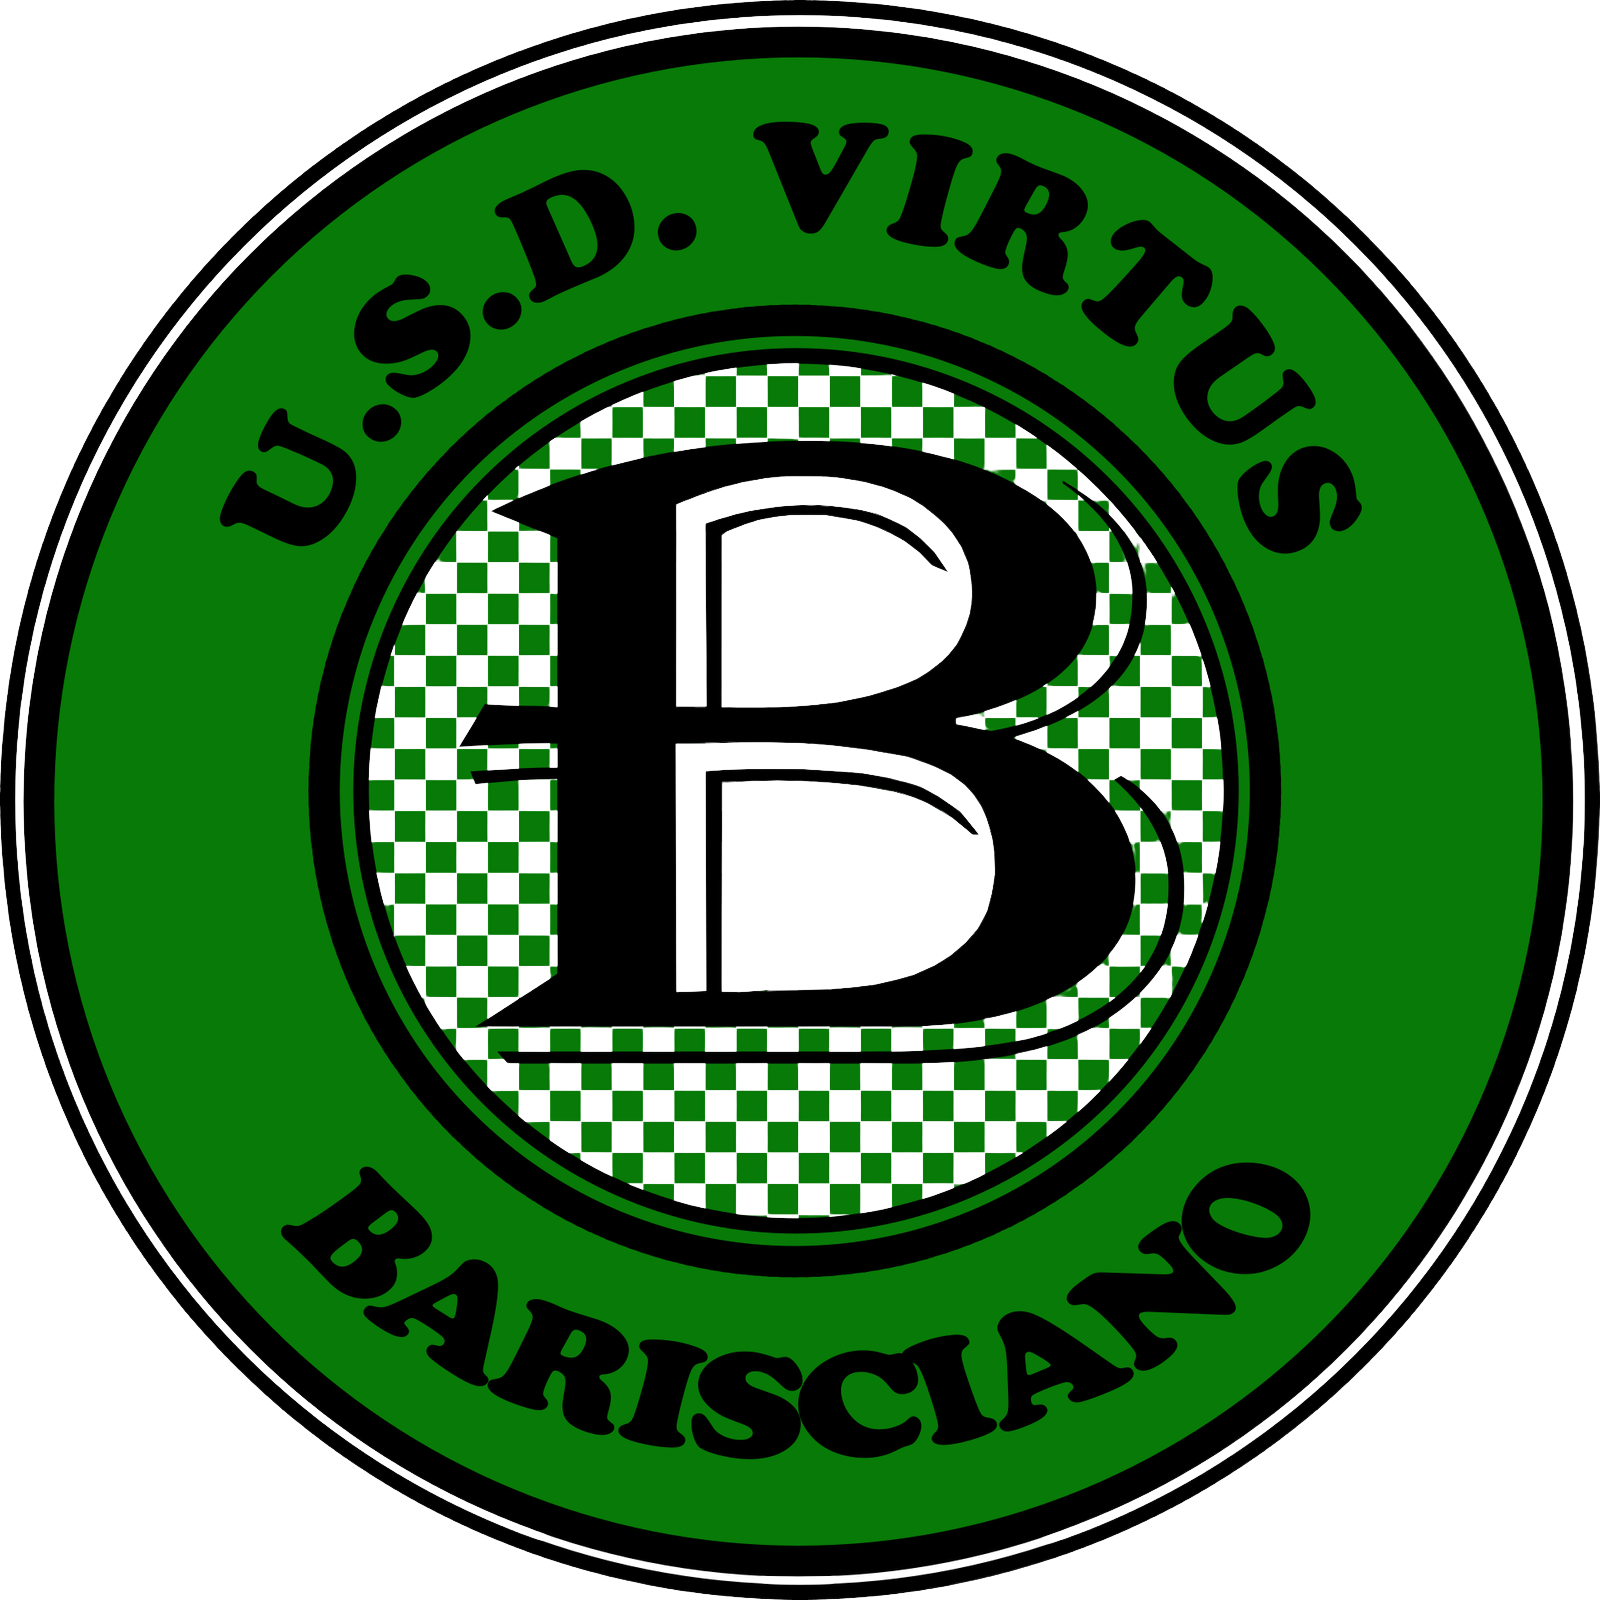 Virtus Barisciano